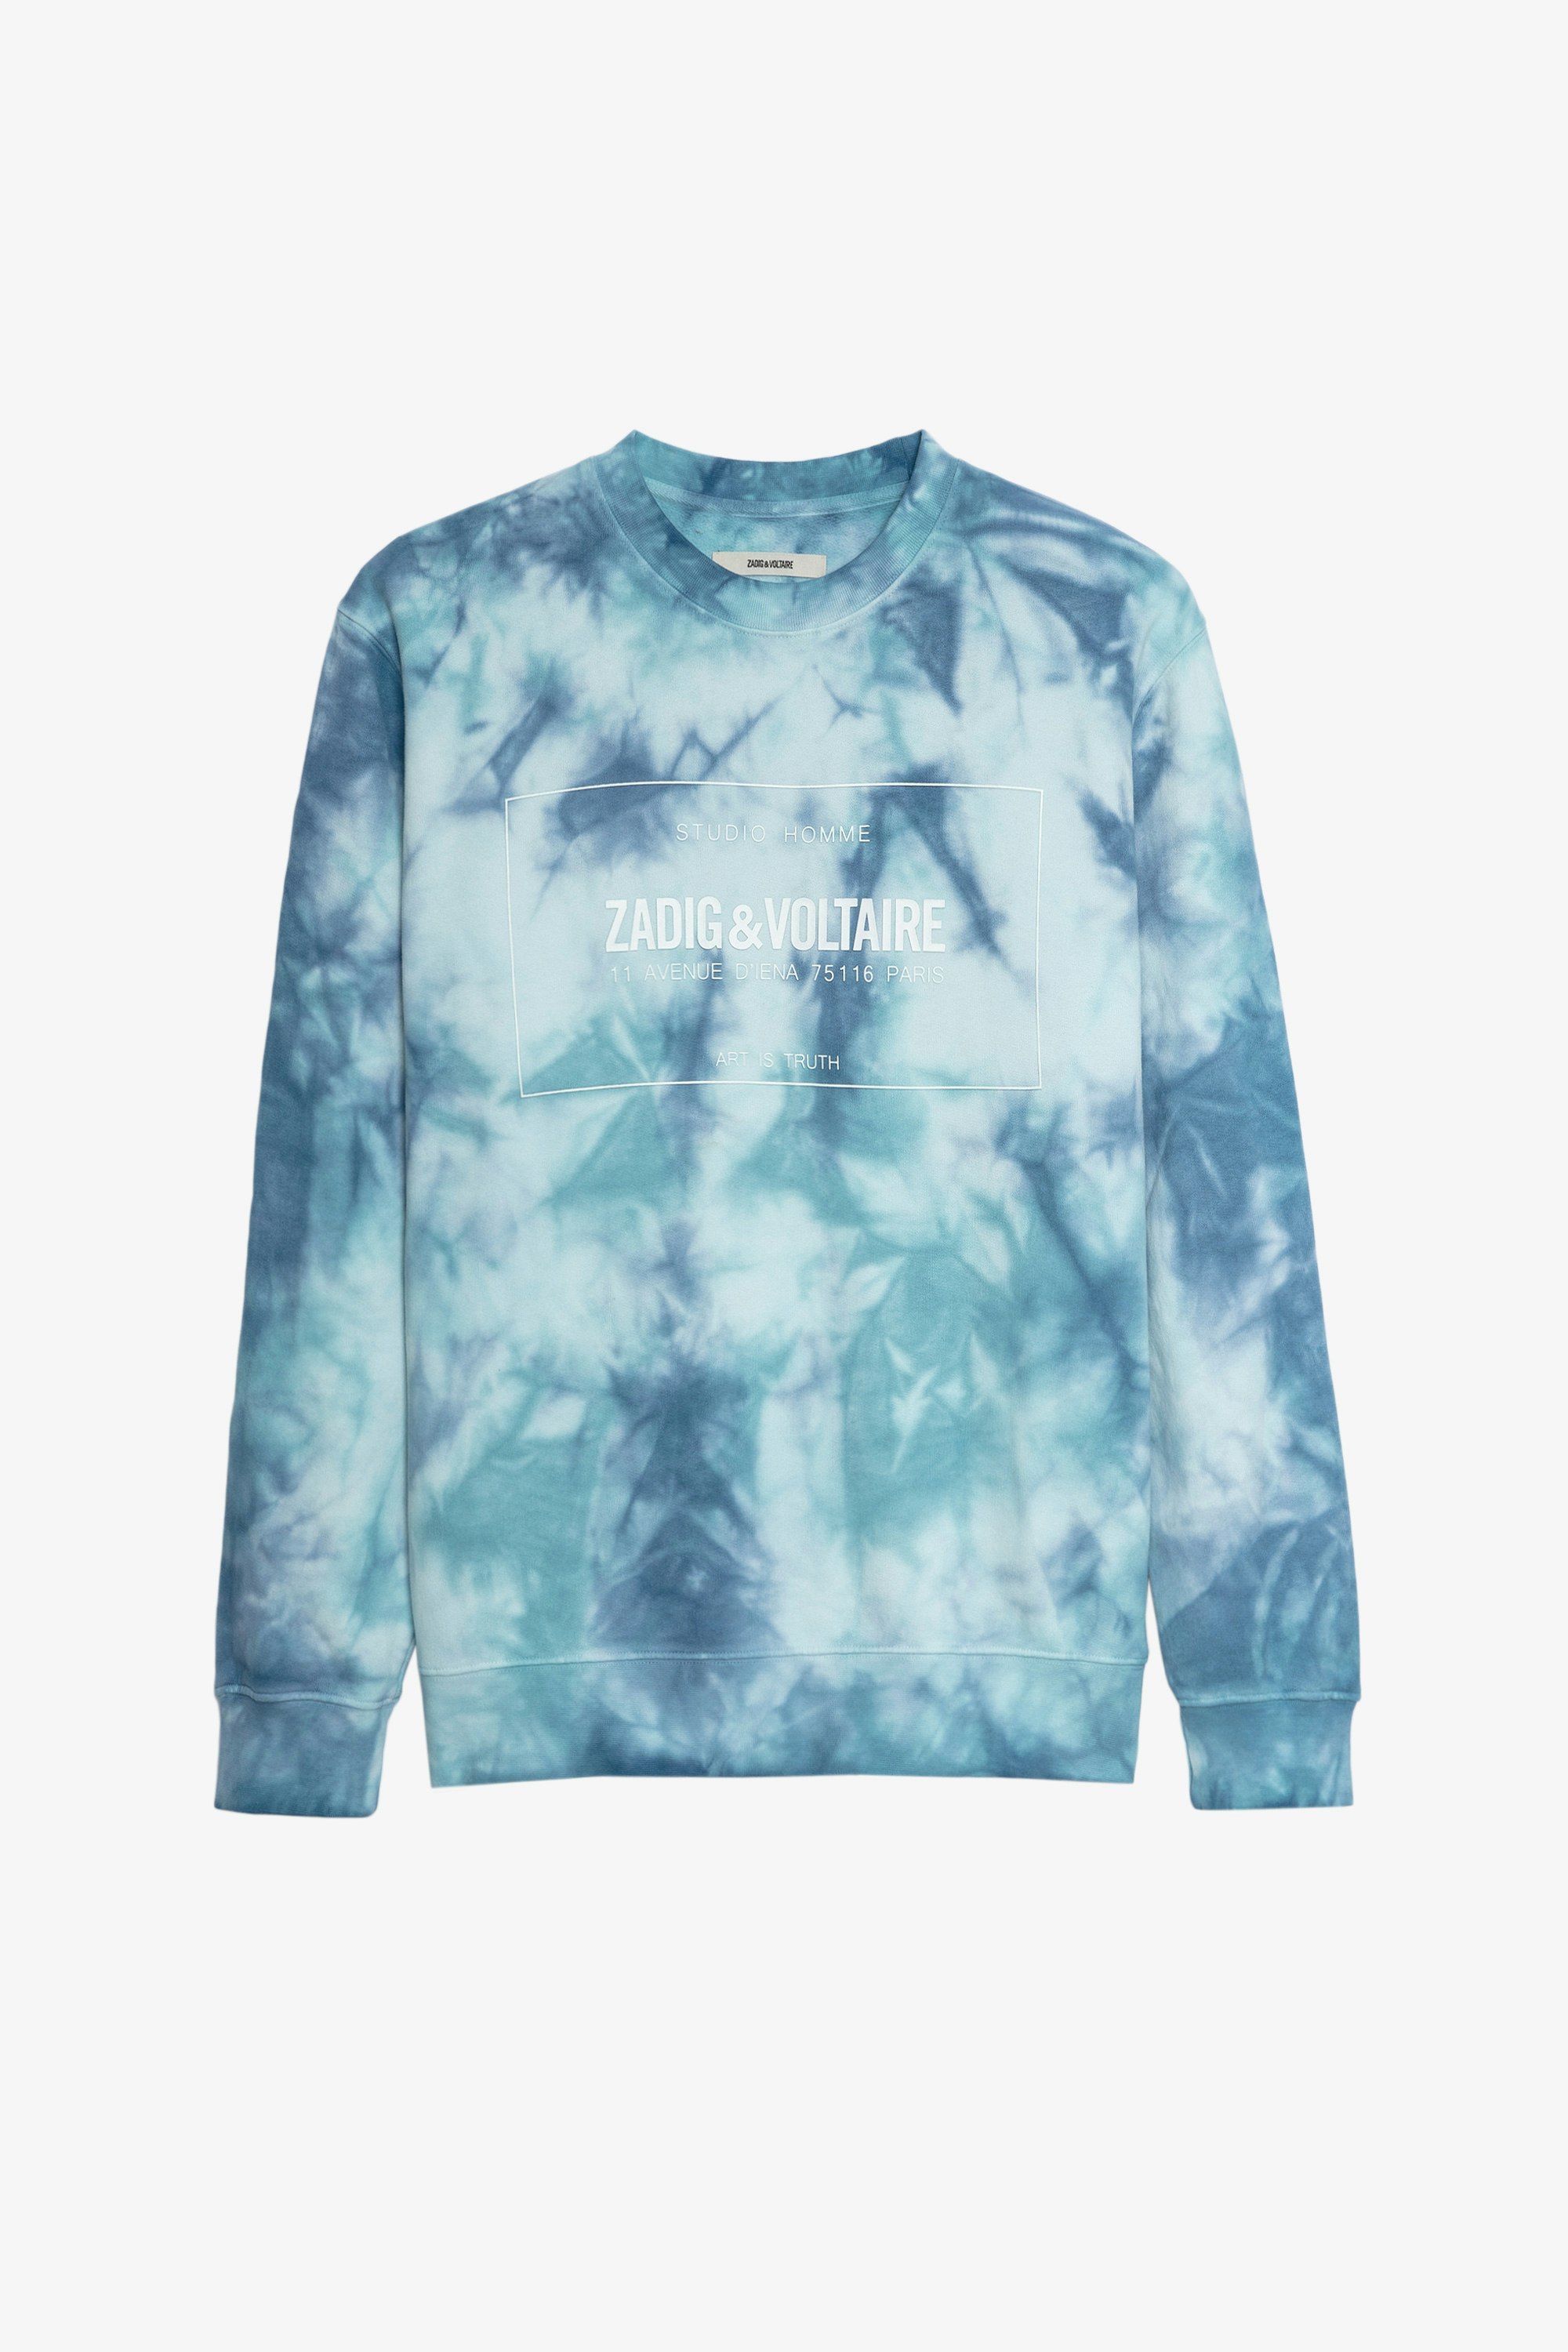 Simba Sweatshirt Men’s tie-dye print cotton sweatshirt